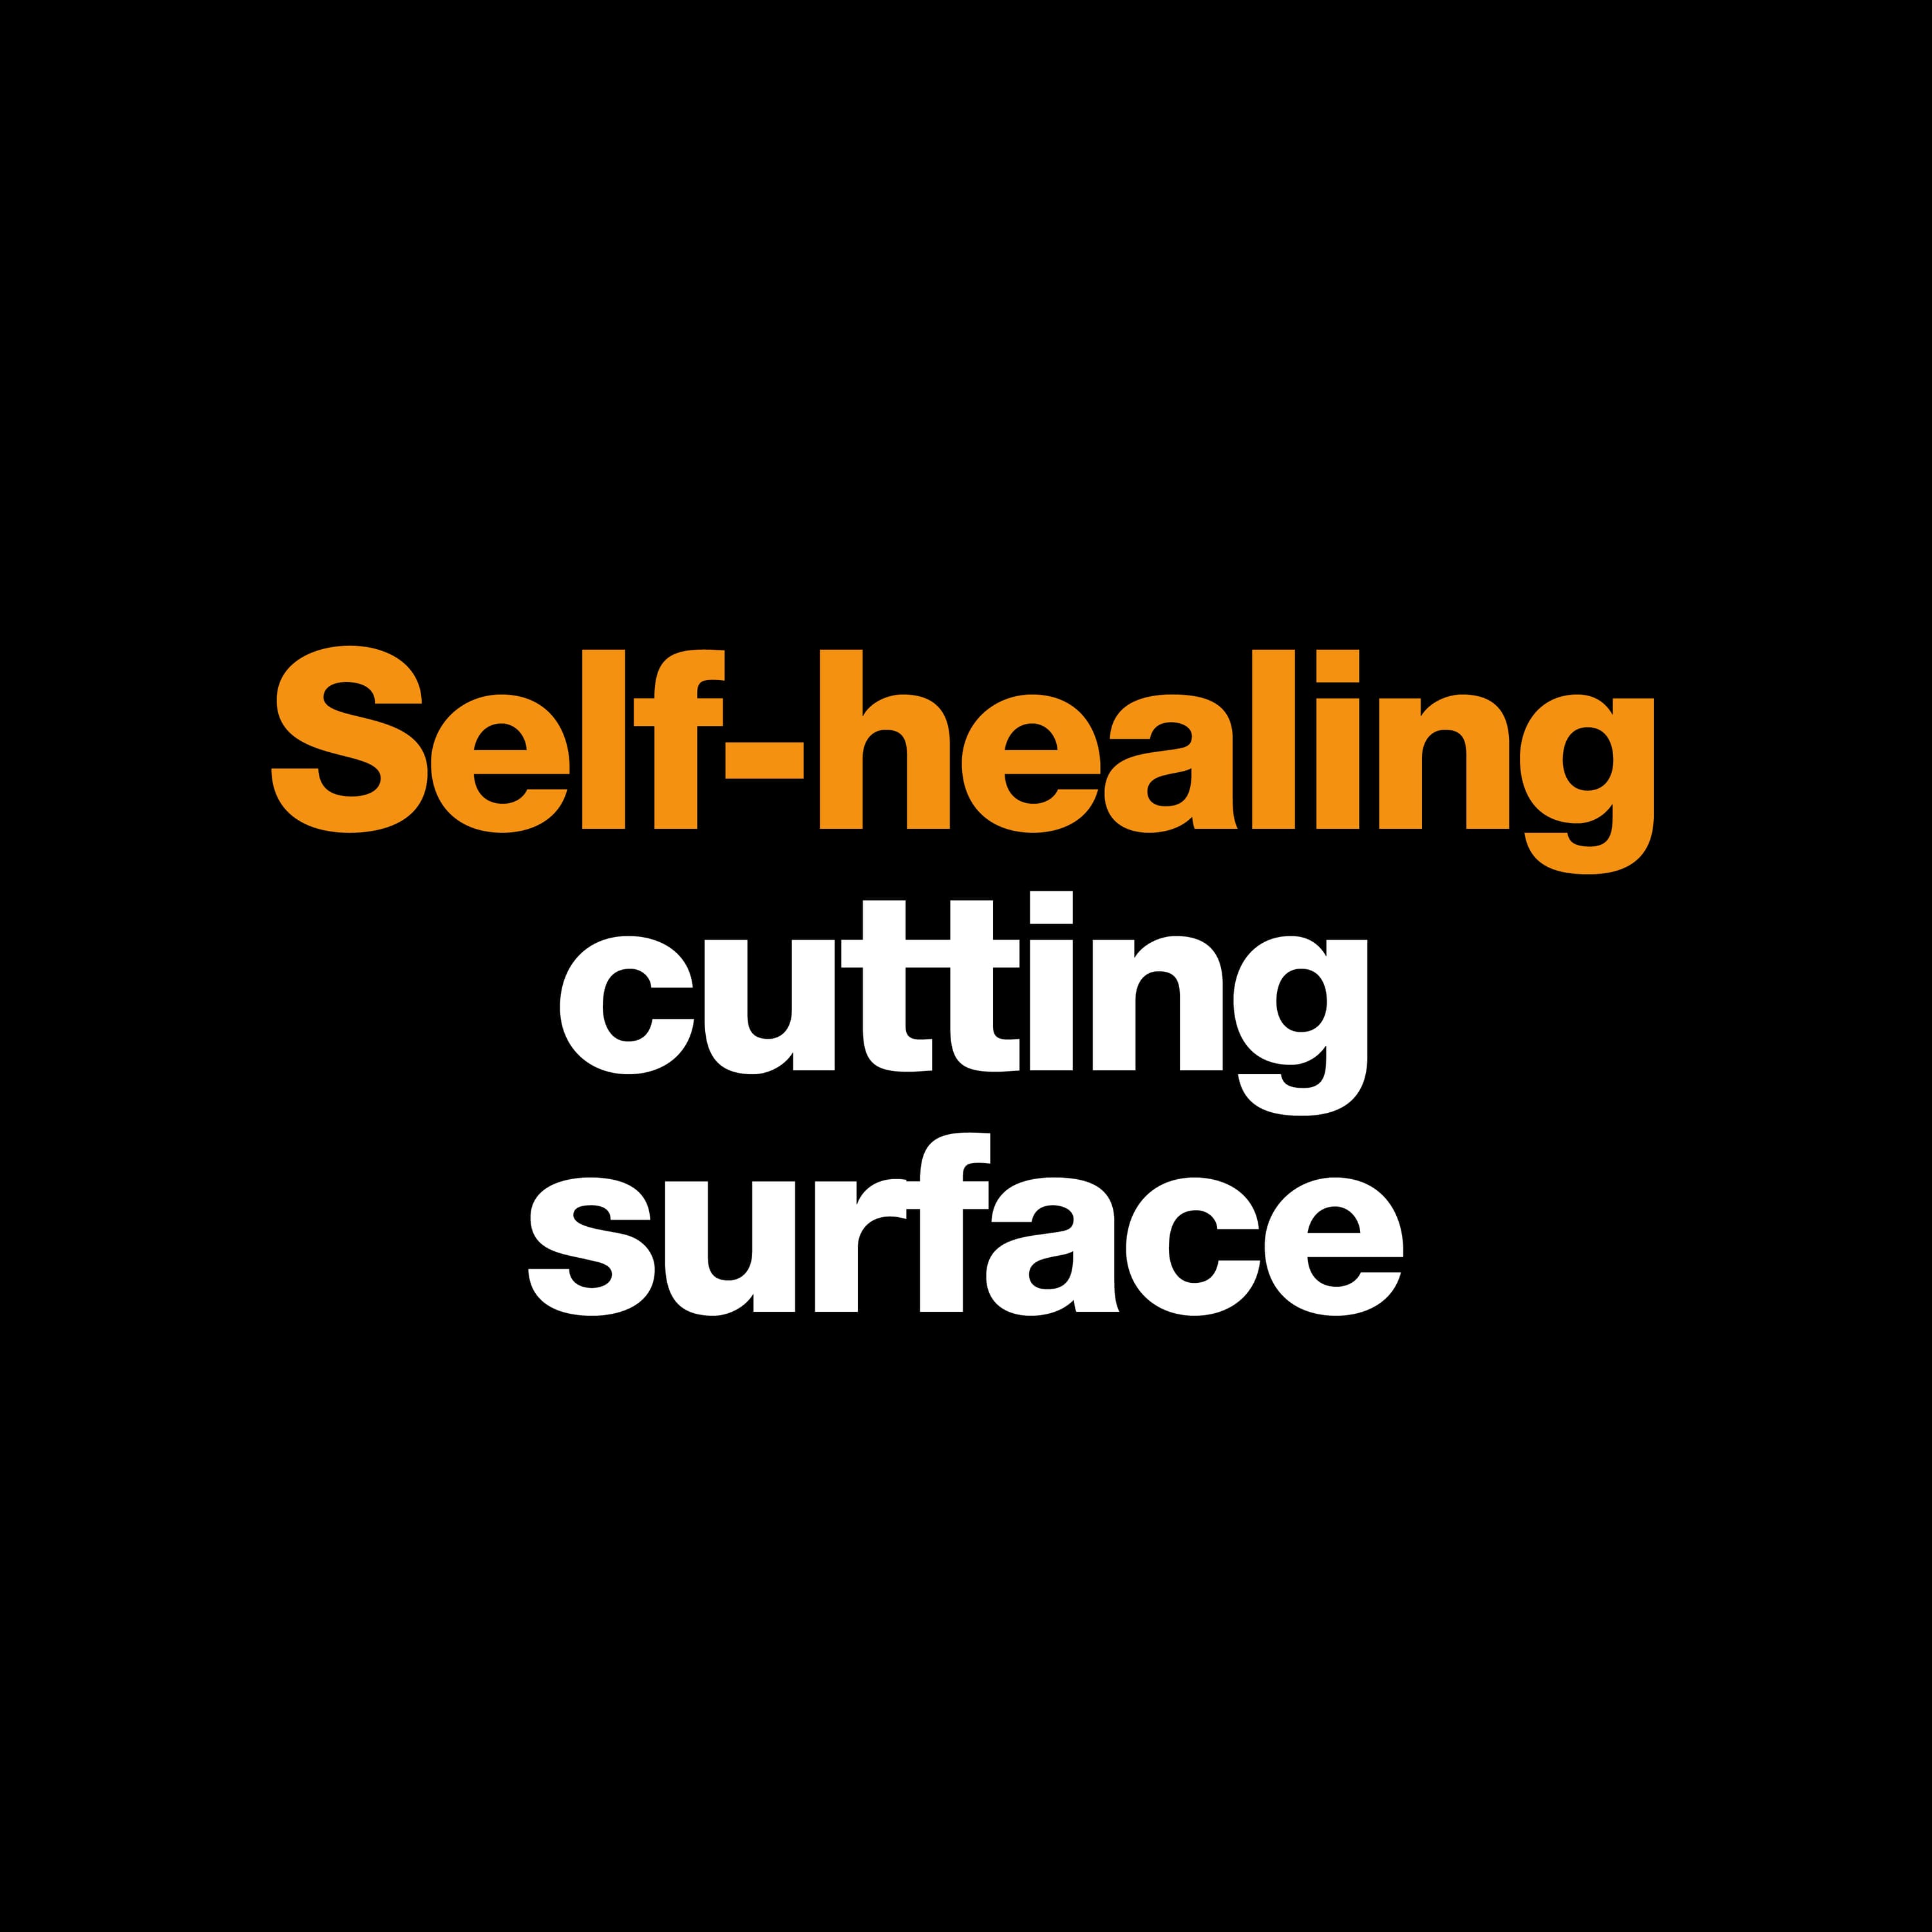 Fiskars-Rotating Cutting Mat Self Healing 8in x 8in — Rocking Chair Quilts